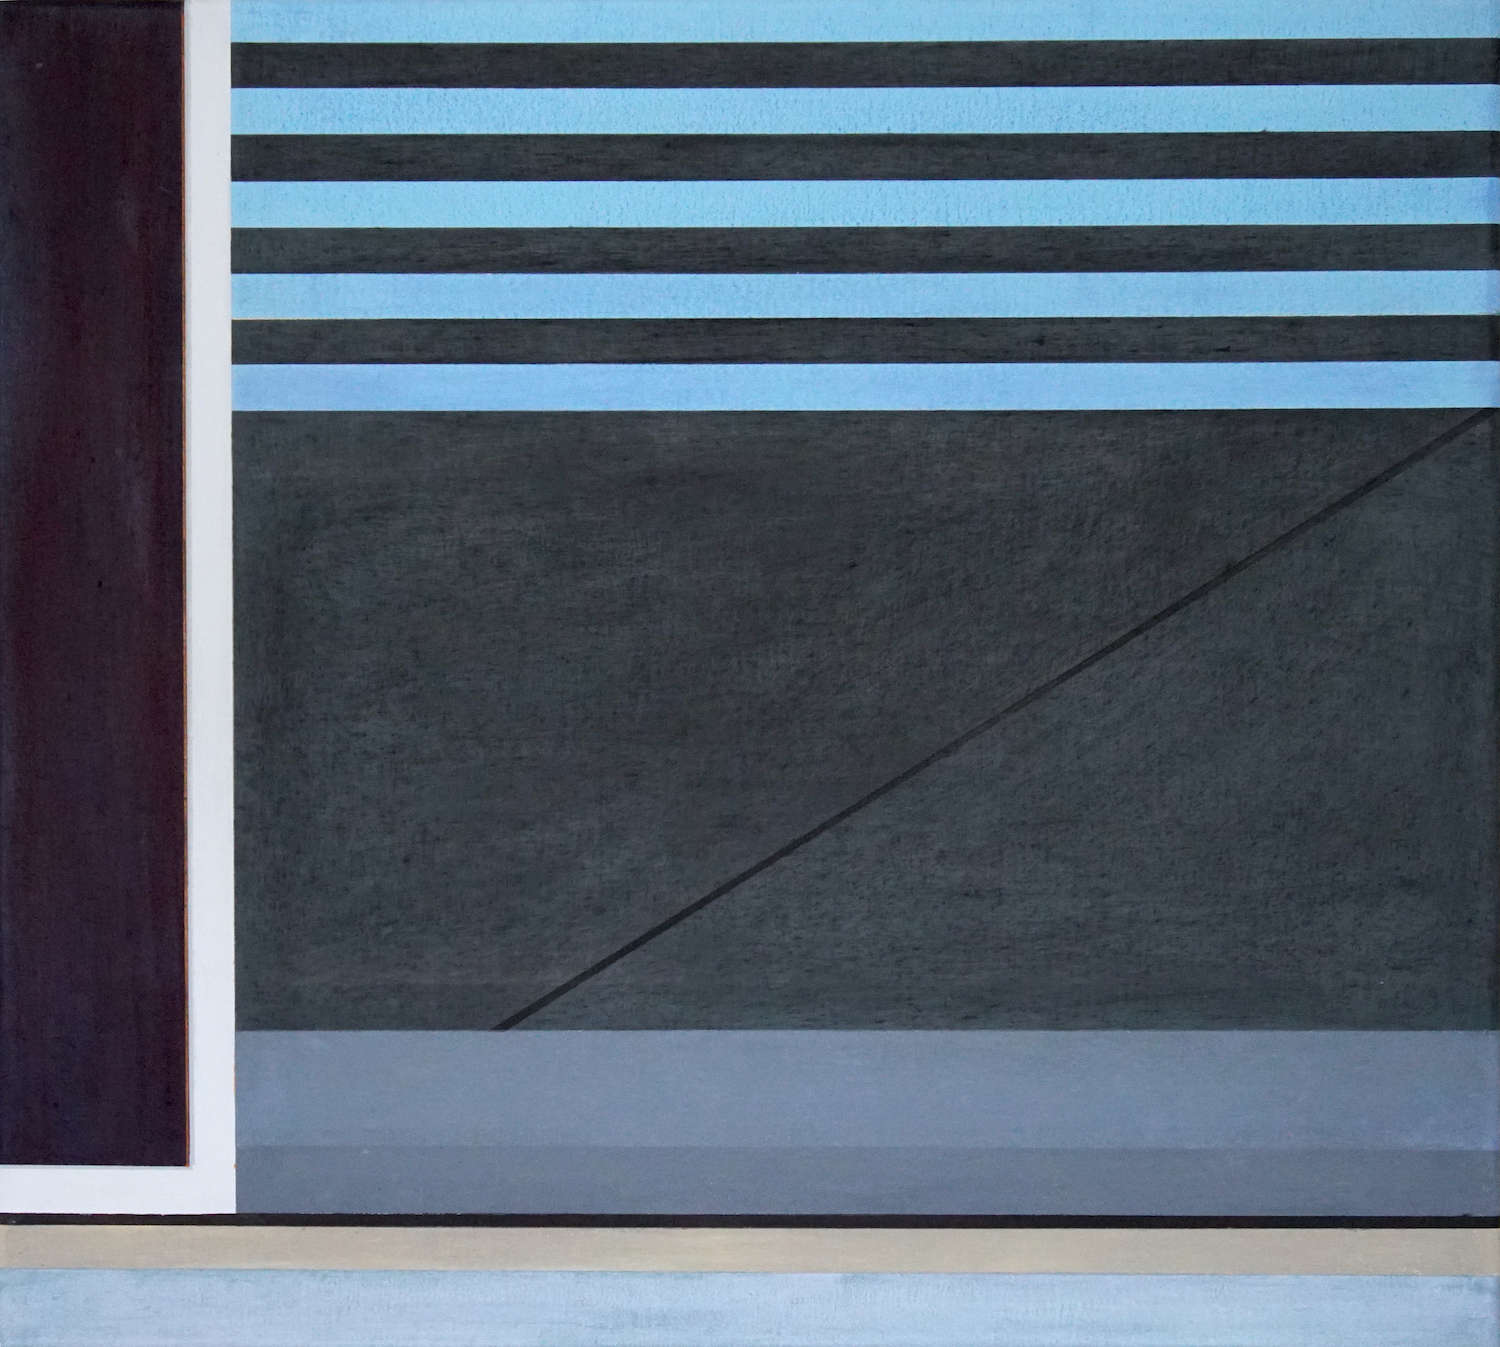 Tegel II, 2020, 45 x 50 cm, Öl/Lw, Oil on Canvas